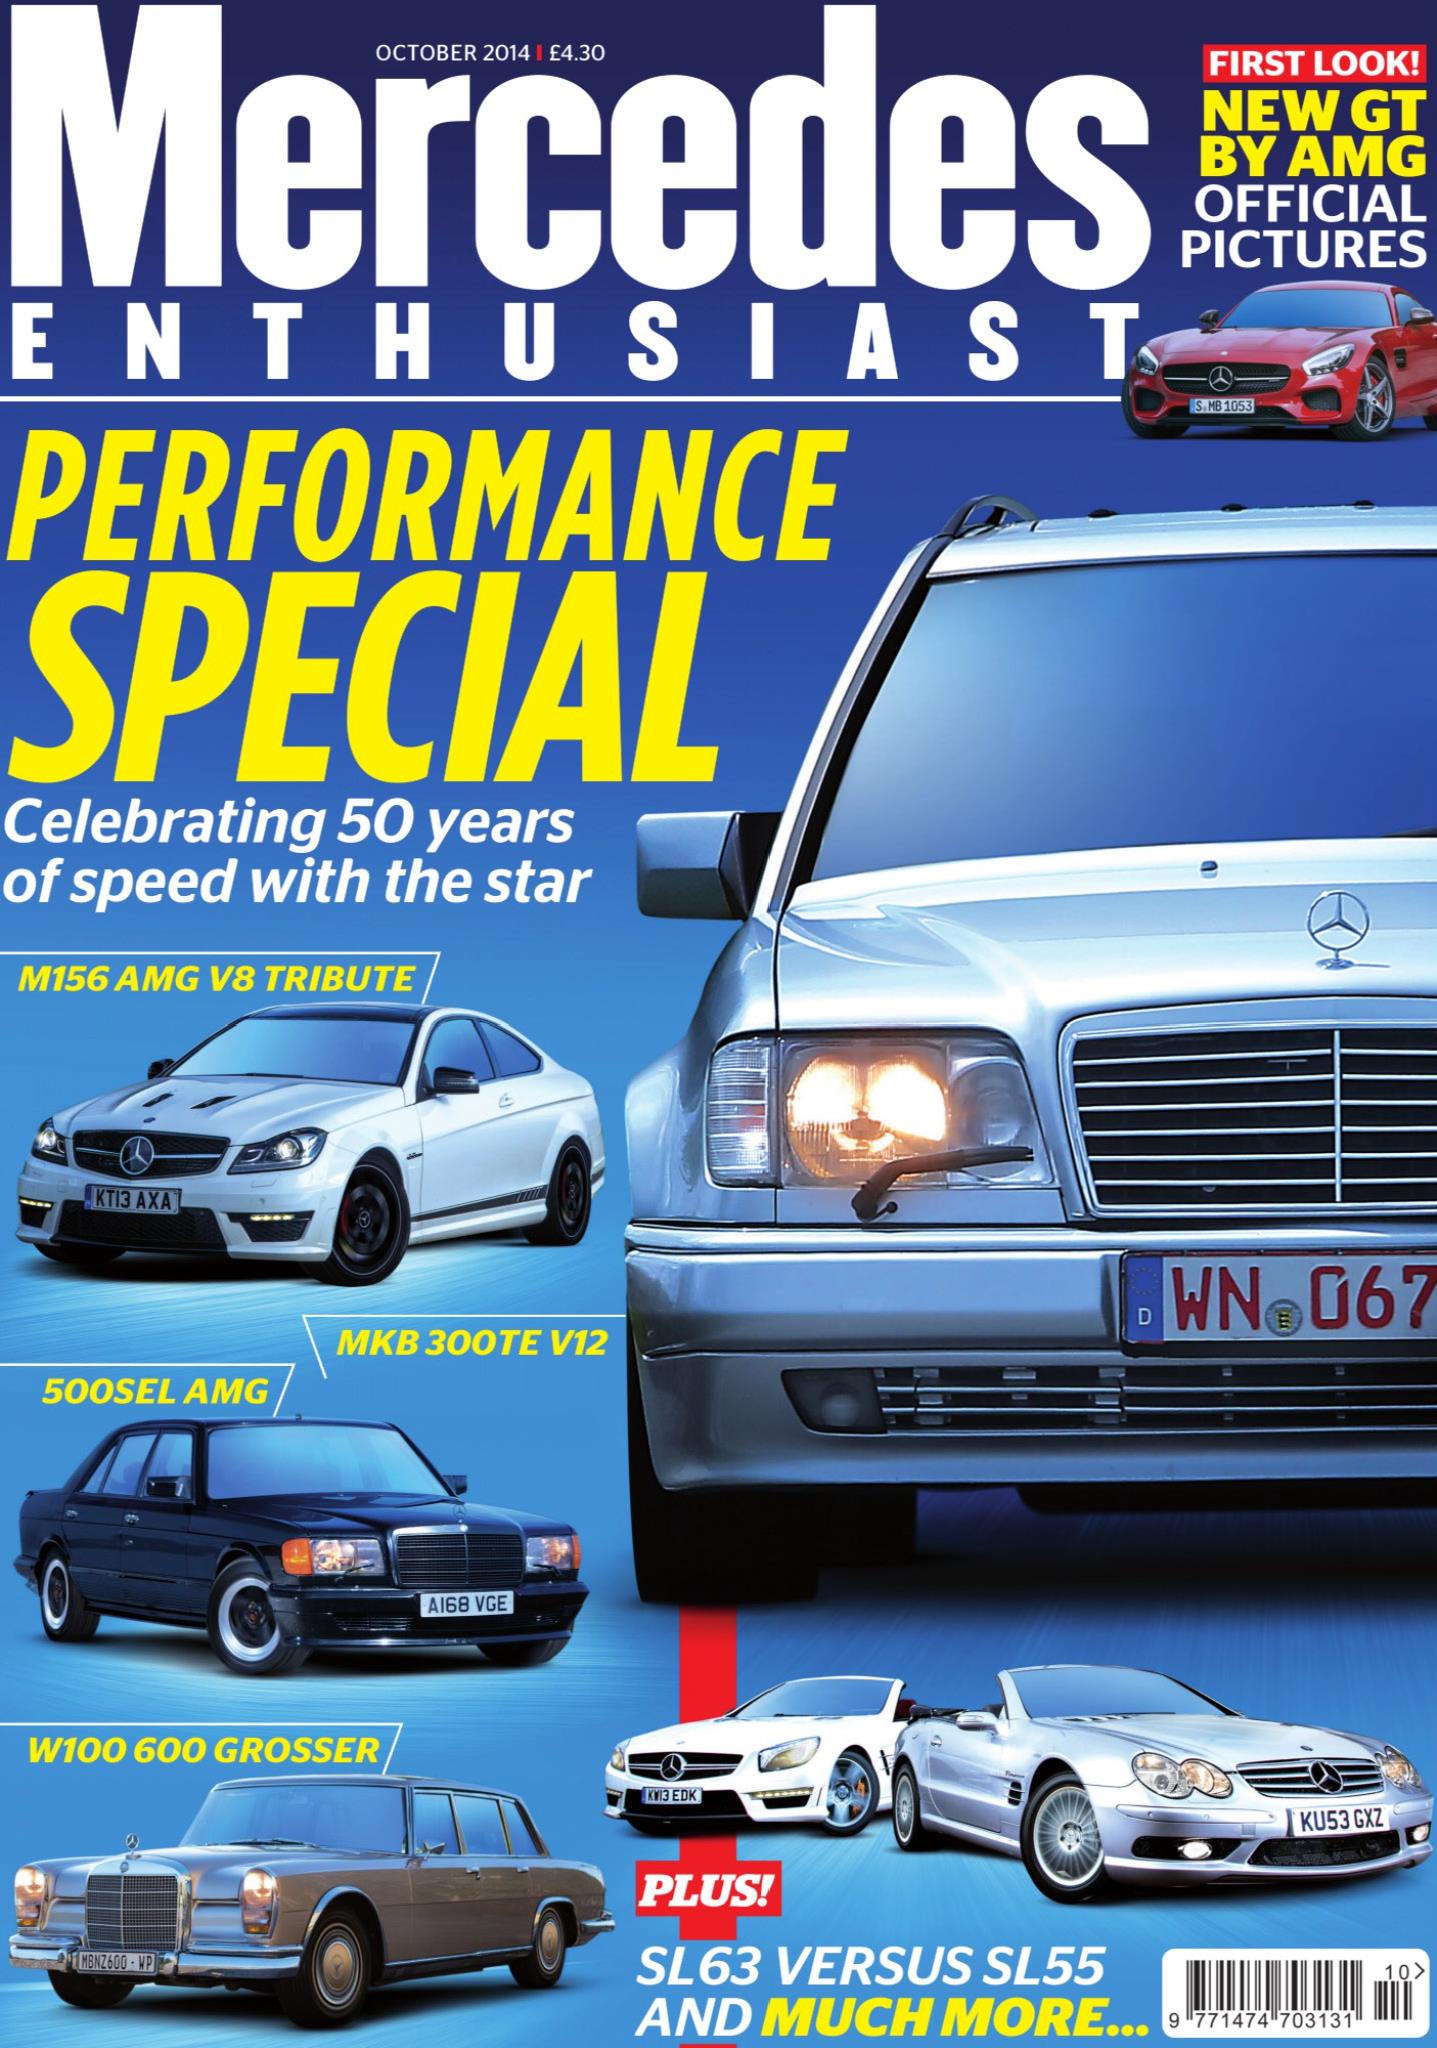 Журнал Mercedes enthusiast. october 2014